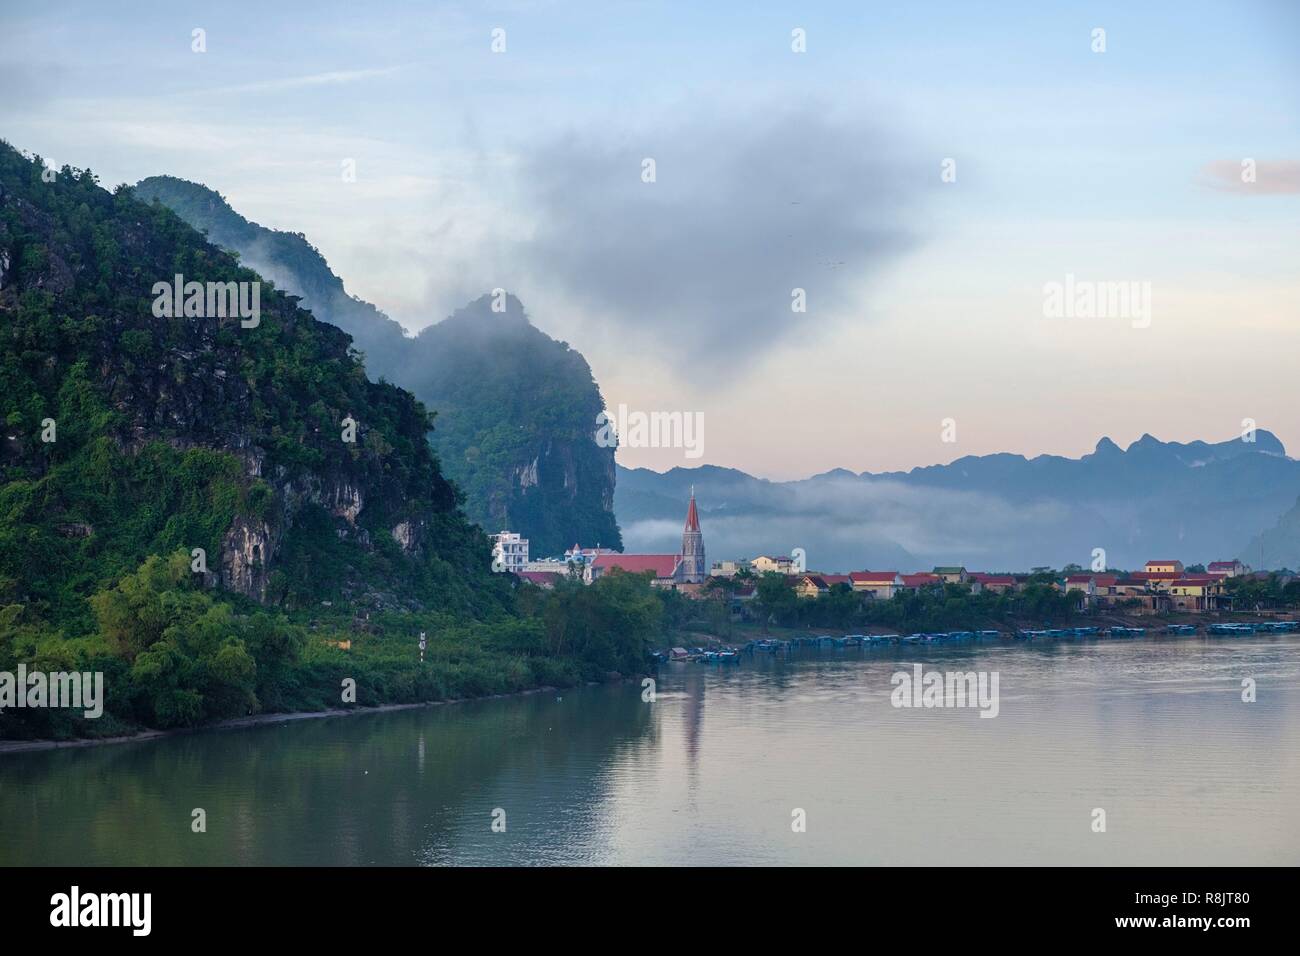 Vietnam, Quang Binh province, National park of Phong Nha-Ke Bang listed as World Heritage by UNESCO, son river Stock Photo